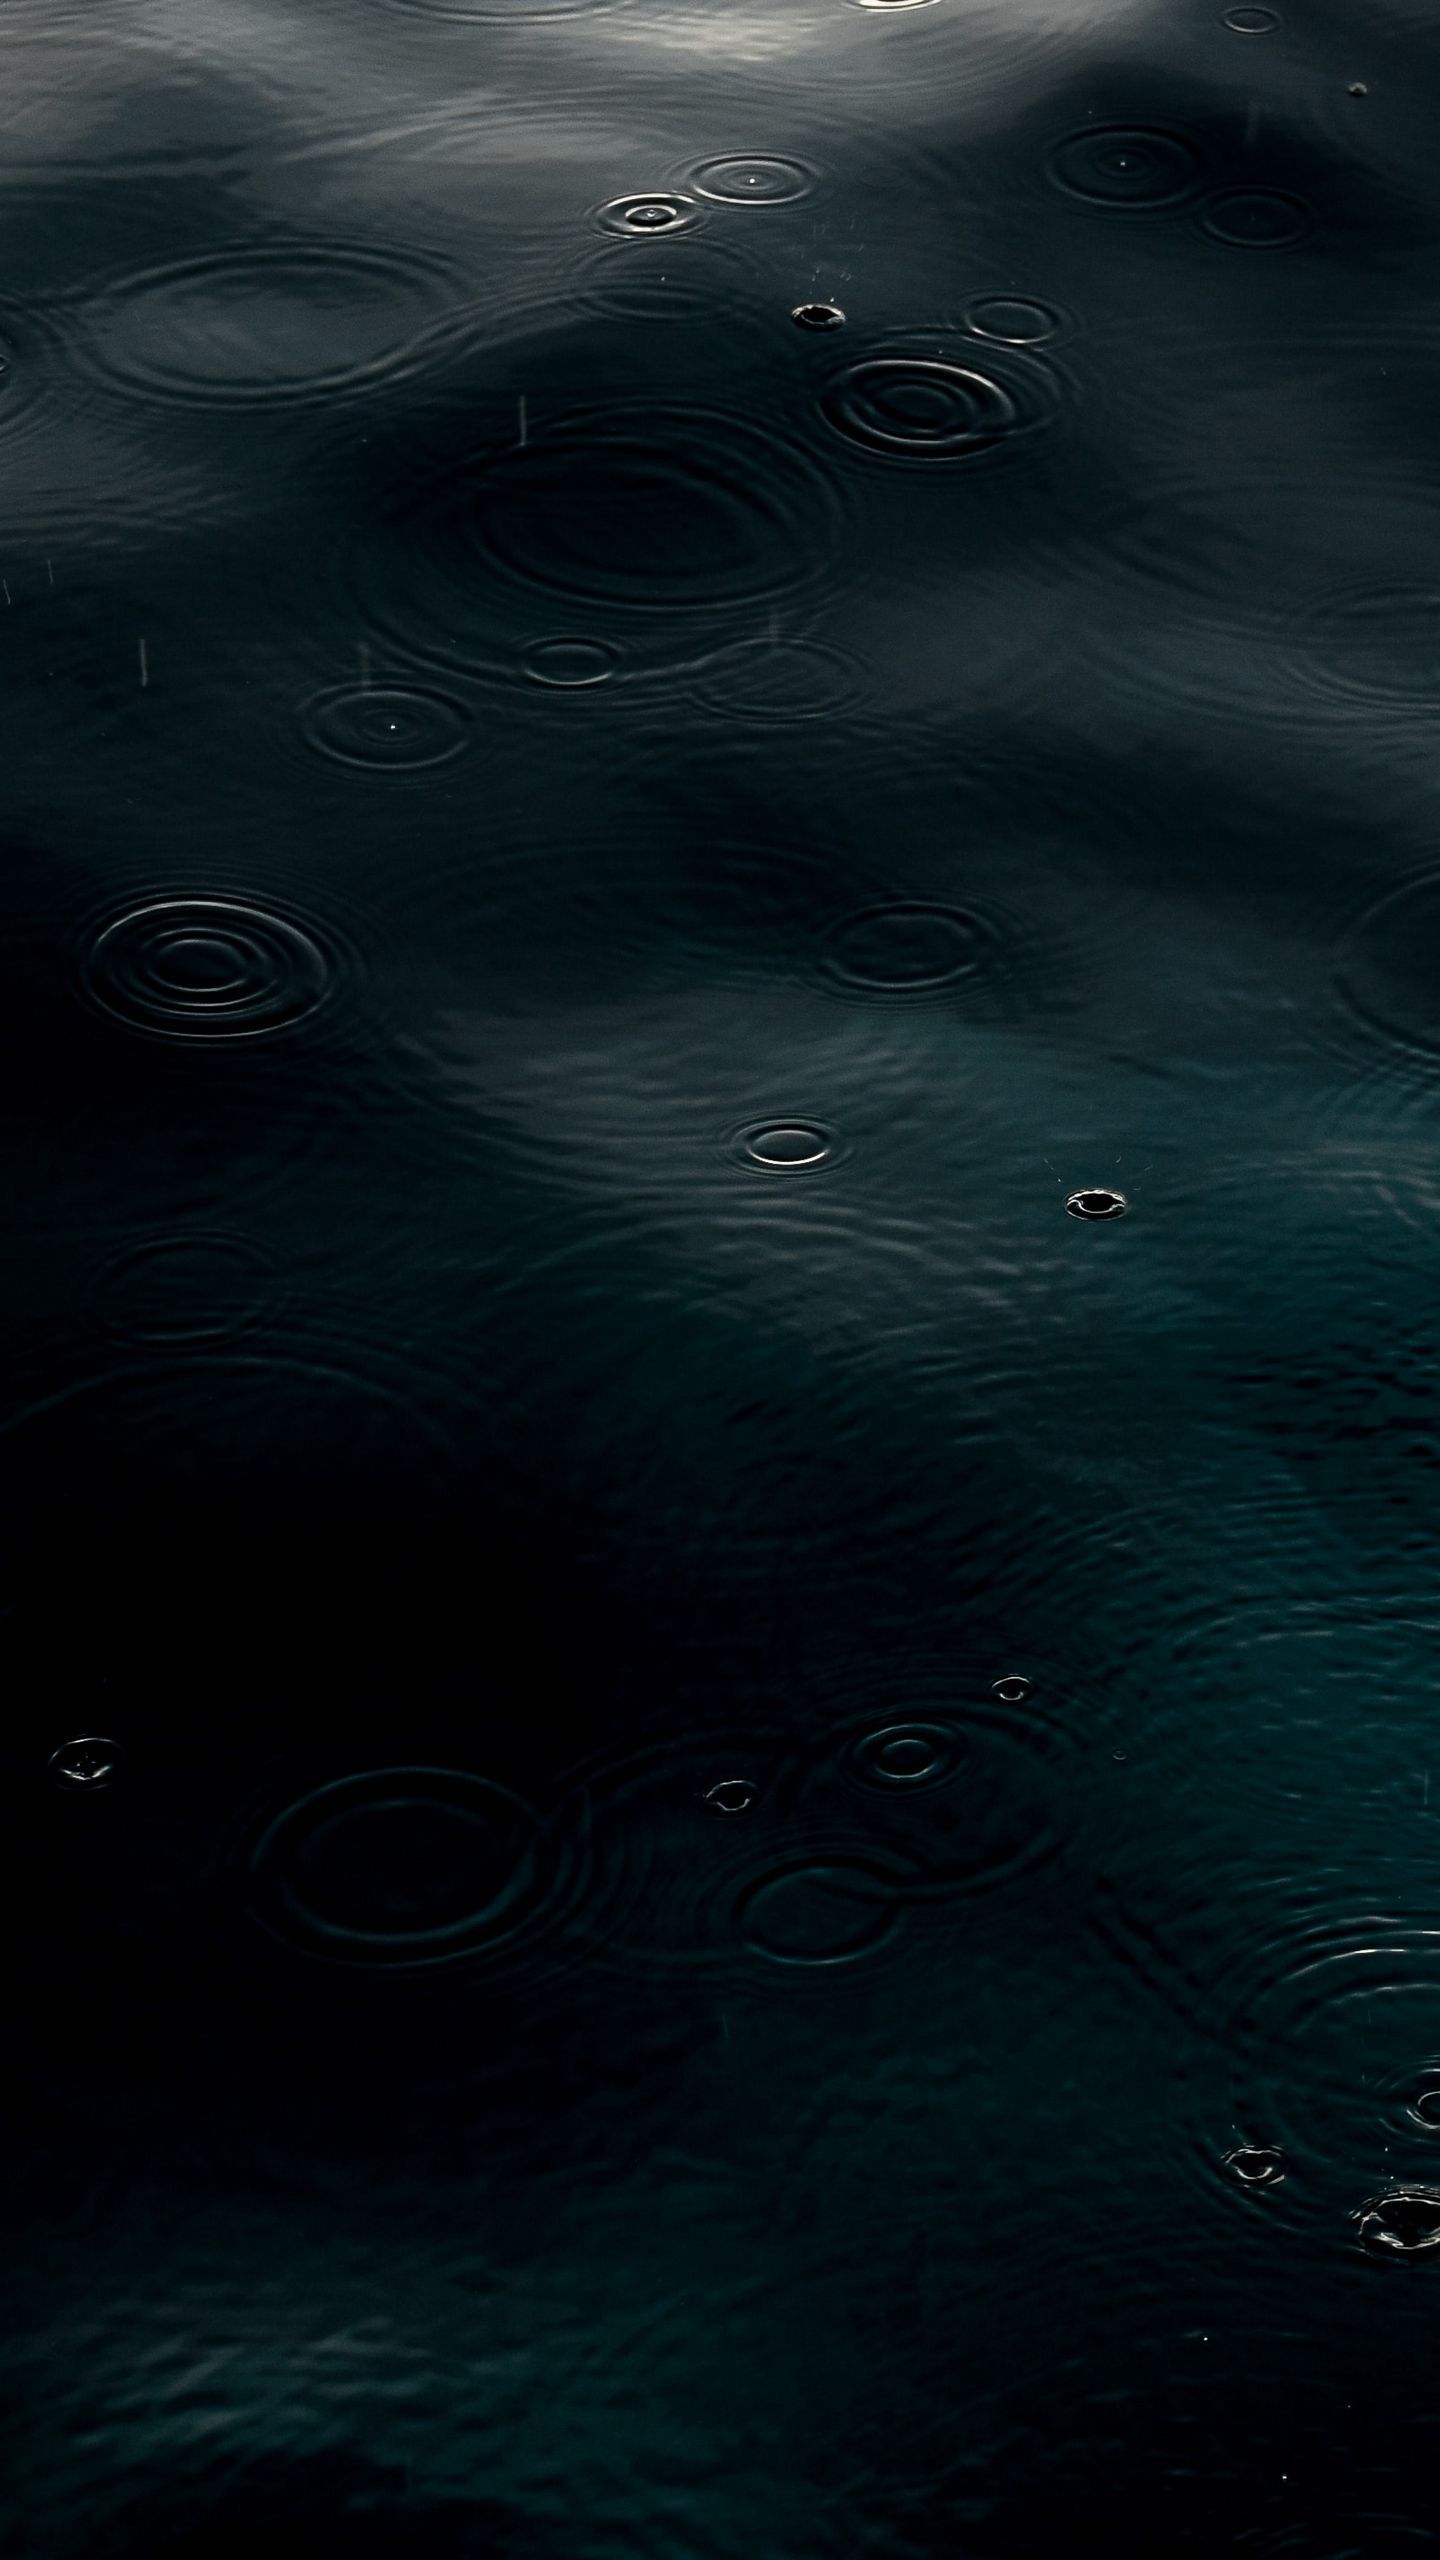 Download wallpaper 1440x2560 water, rain, drops, waves, dark qhd samsung galaxy s s edge, note, lg g4 HD background